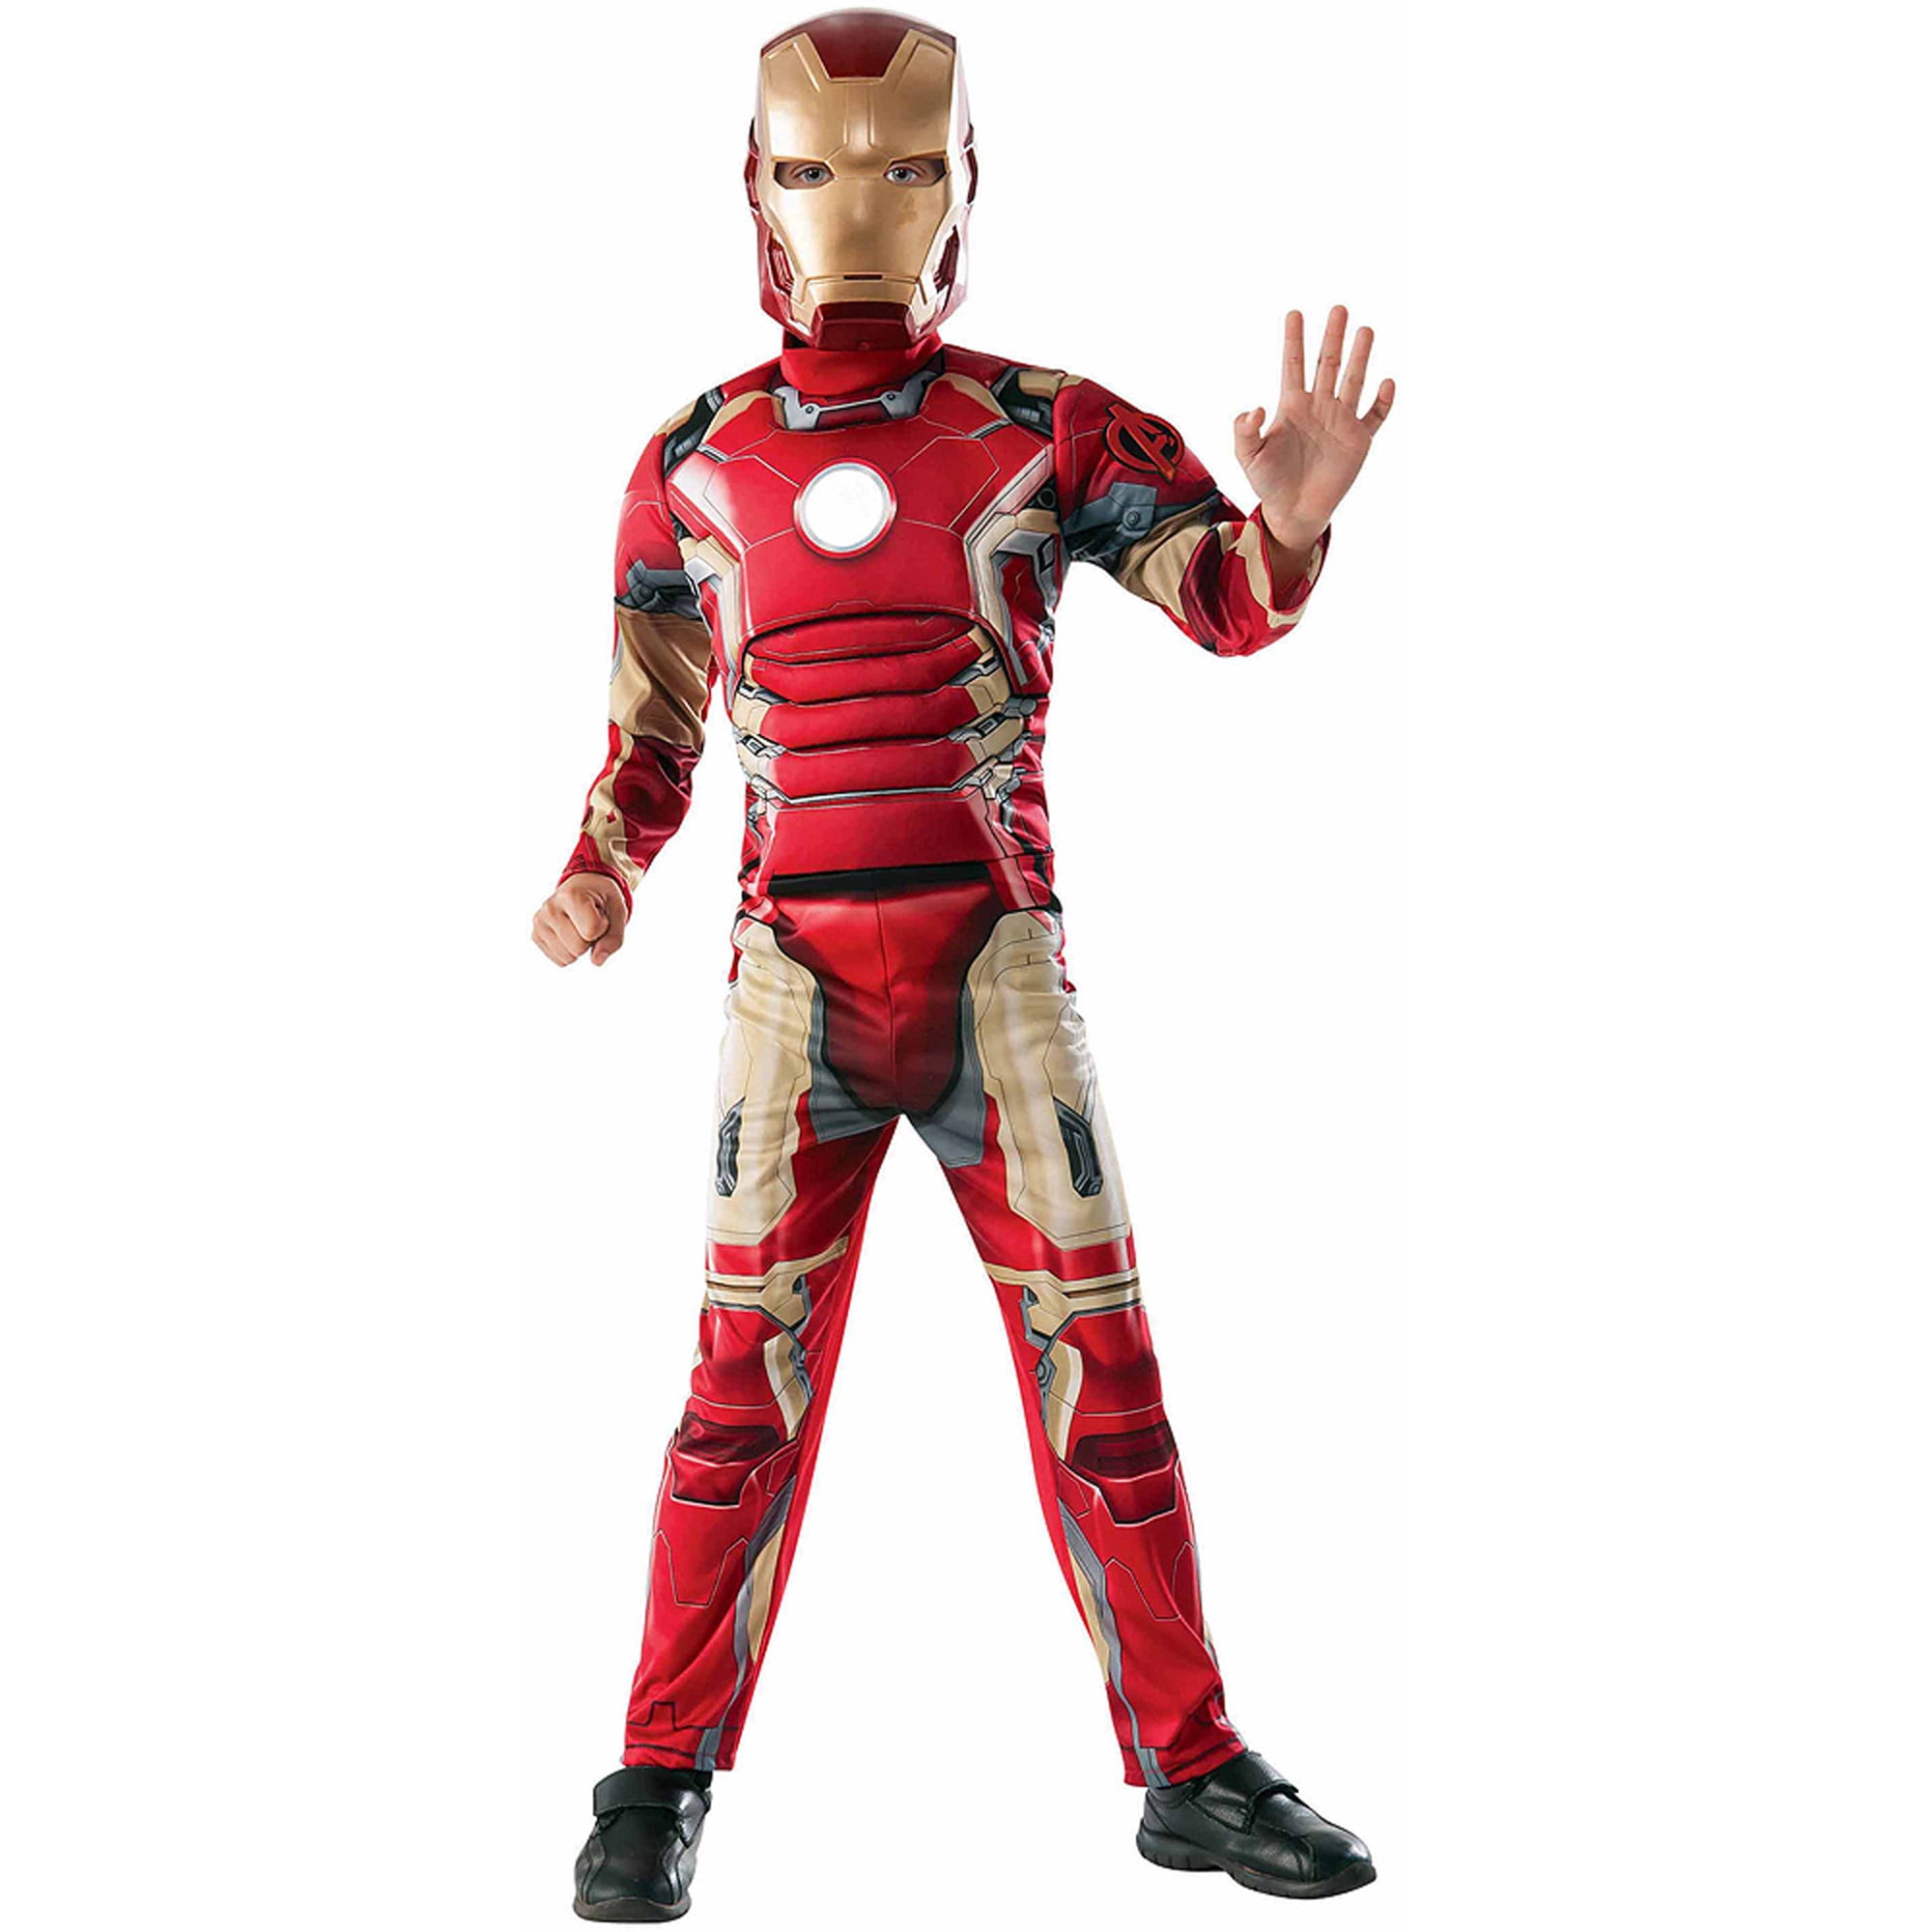 Avengers Age of Ultron Iron Man Child Costume 